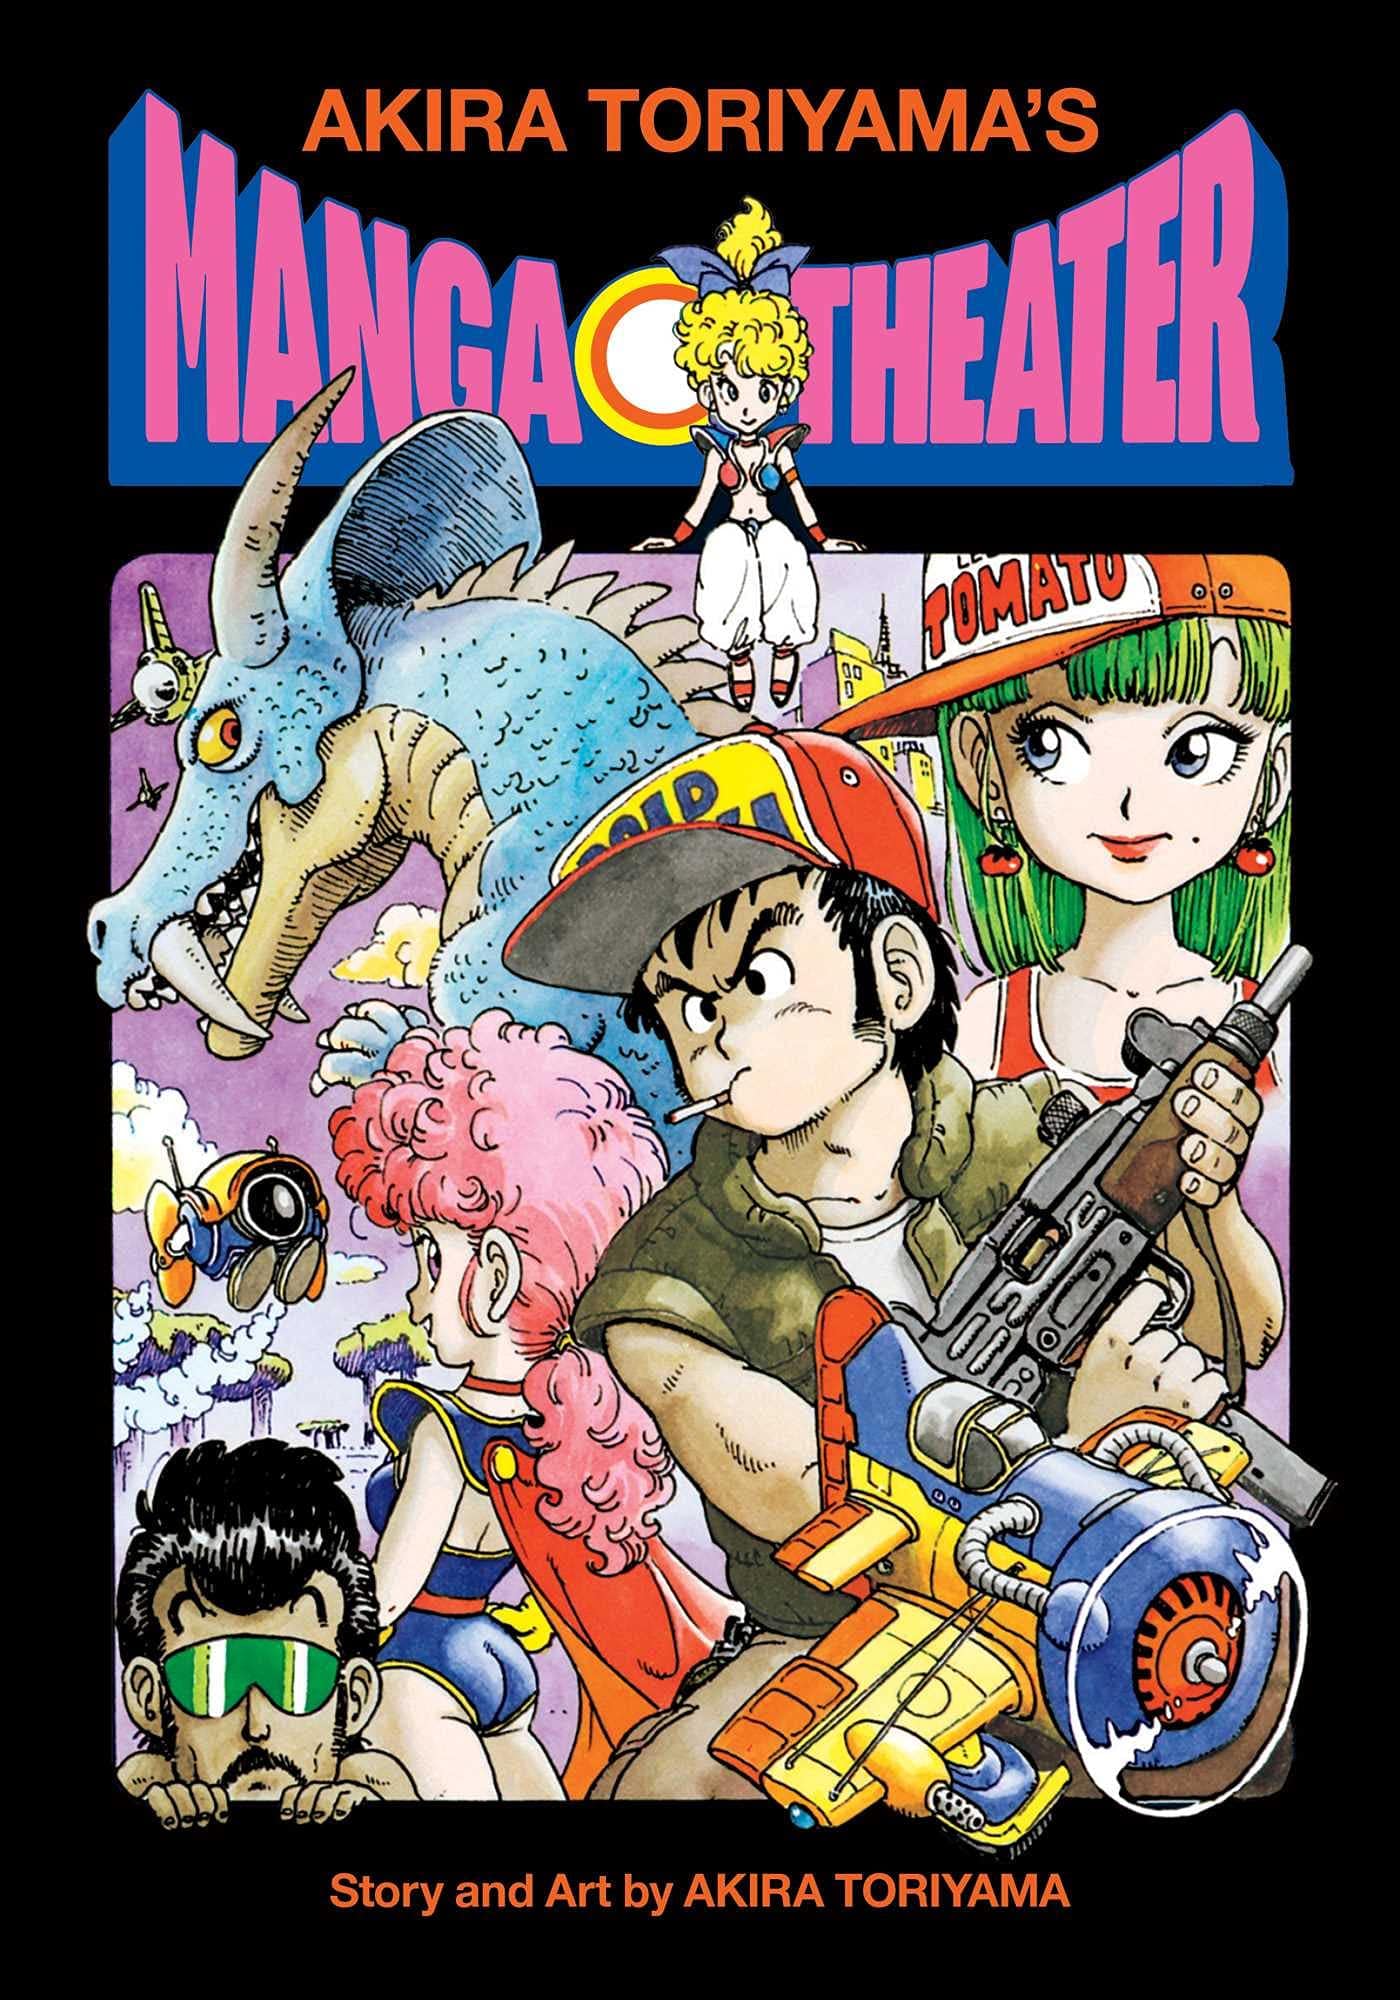 Manga Theater by Akira Toriyama HC - Third Eye